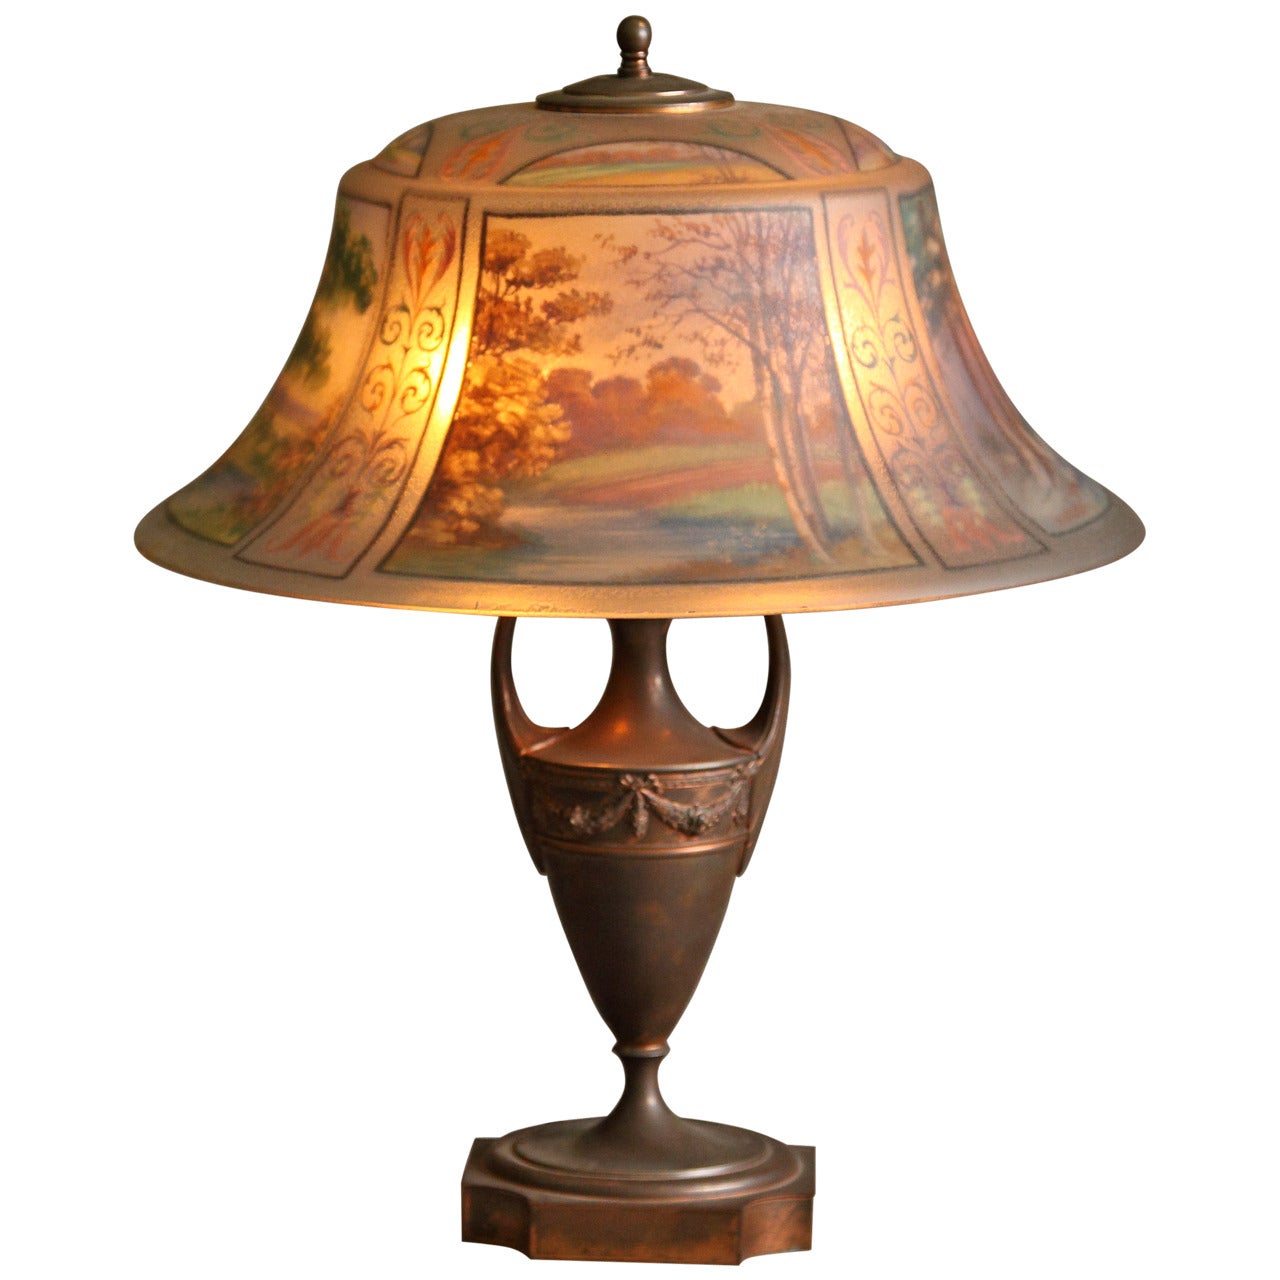 Pairpoint Reverse Painted Art Nouveau Lamp Depicting the Four Seasons